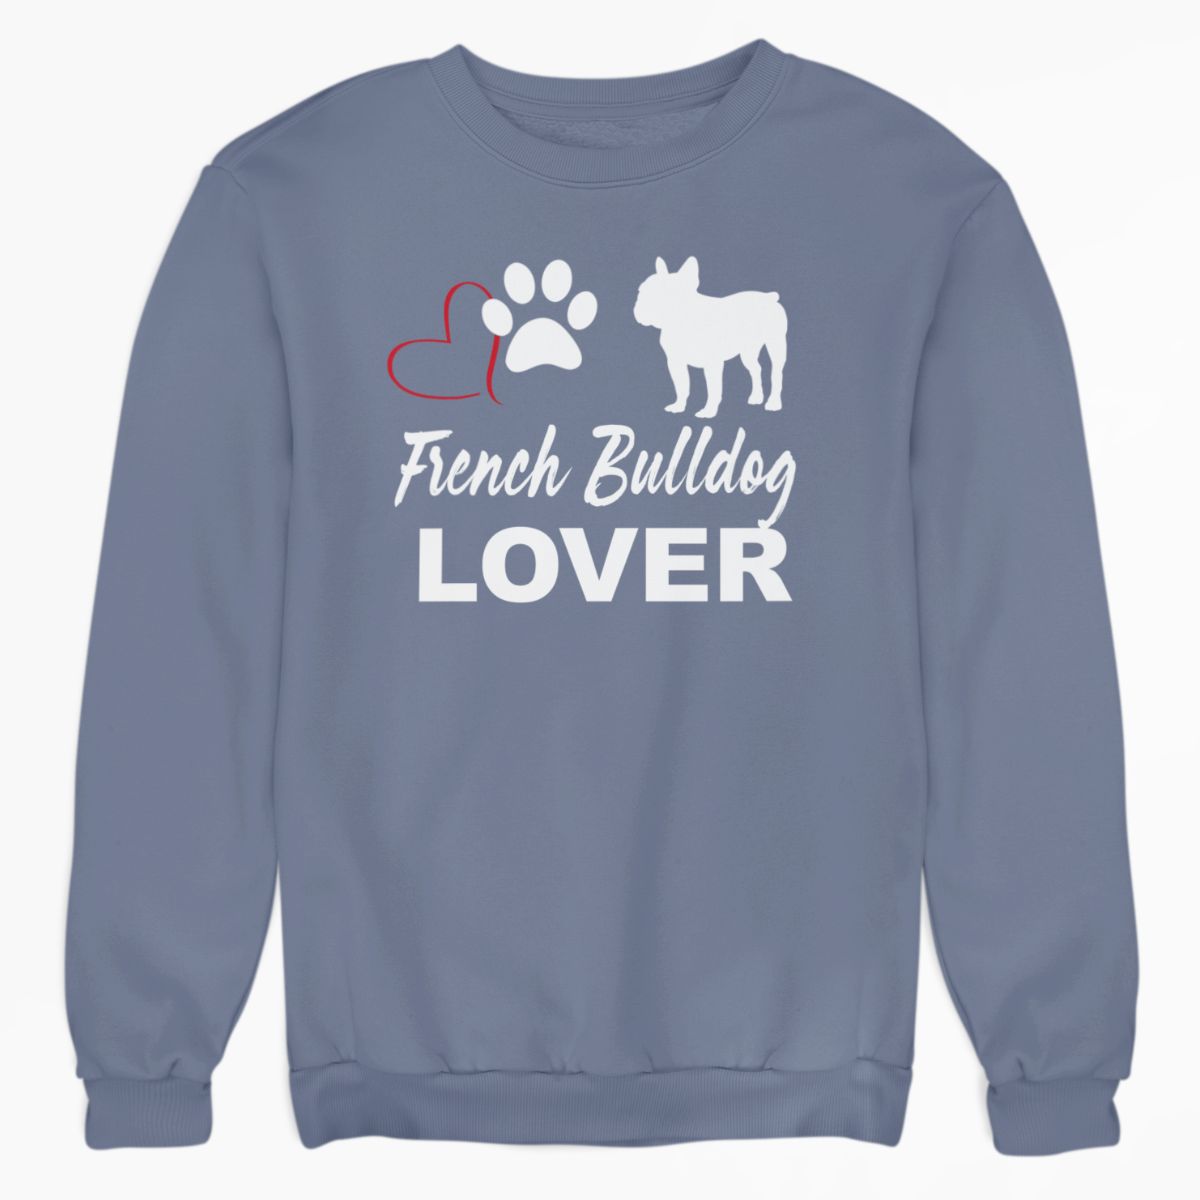 French Bulldog Lover Shirt